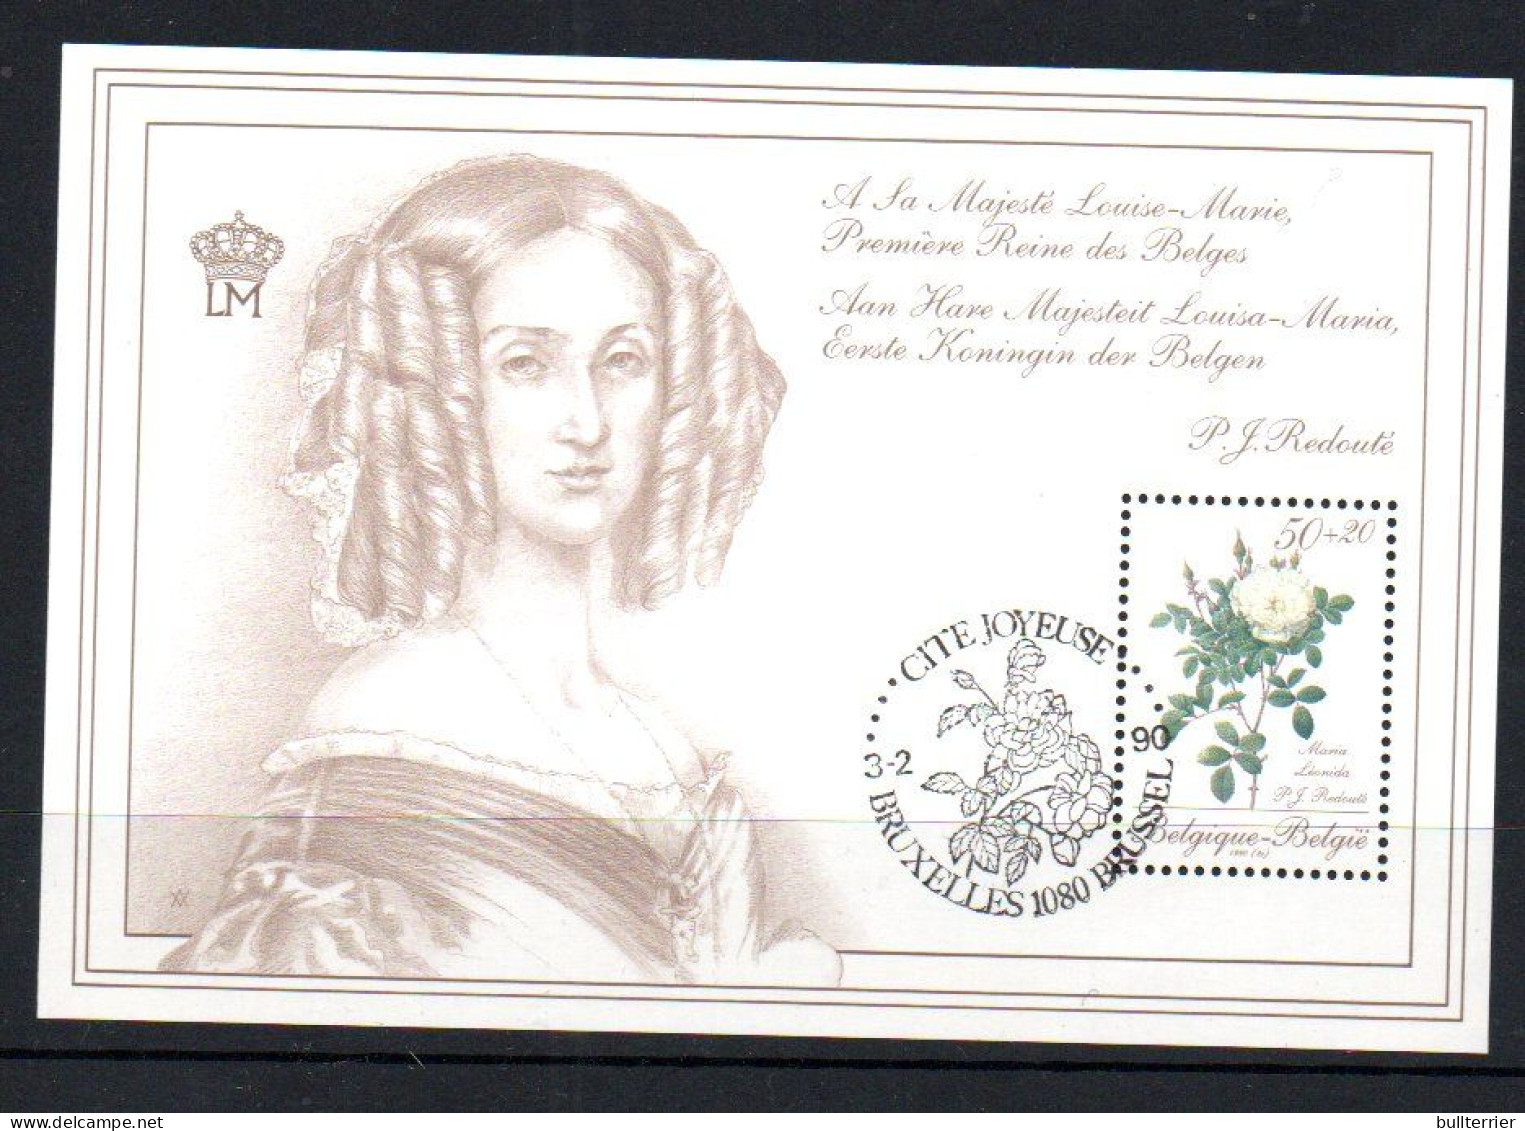 BELGIUM -1990 - ROSES SOUVENIR SHEET FINE USED ,  SG CAT £11 - Used Stamps